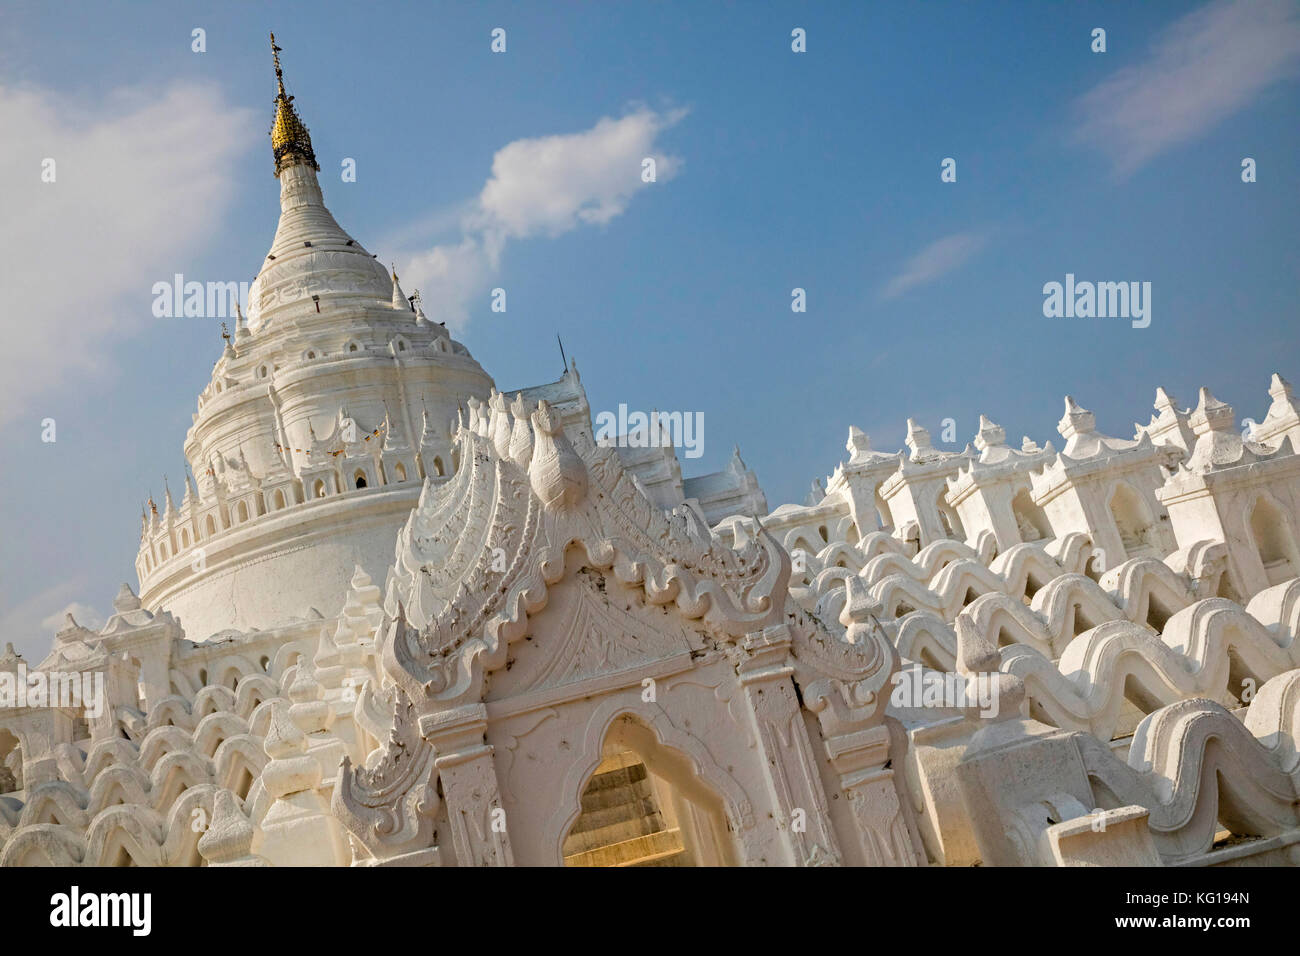 Hsinbyume pagoda / Myatheindan pagoda, the white temple in Mingun near Mandalay in Sagaing Region in central Myanmar / Burma Stock Photo